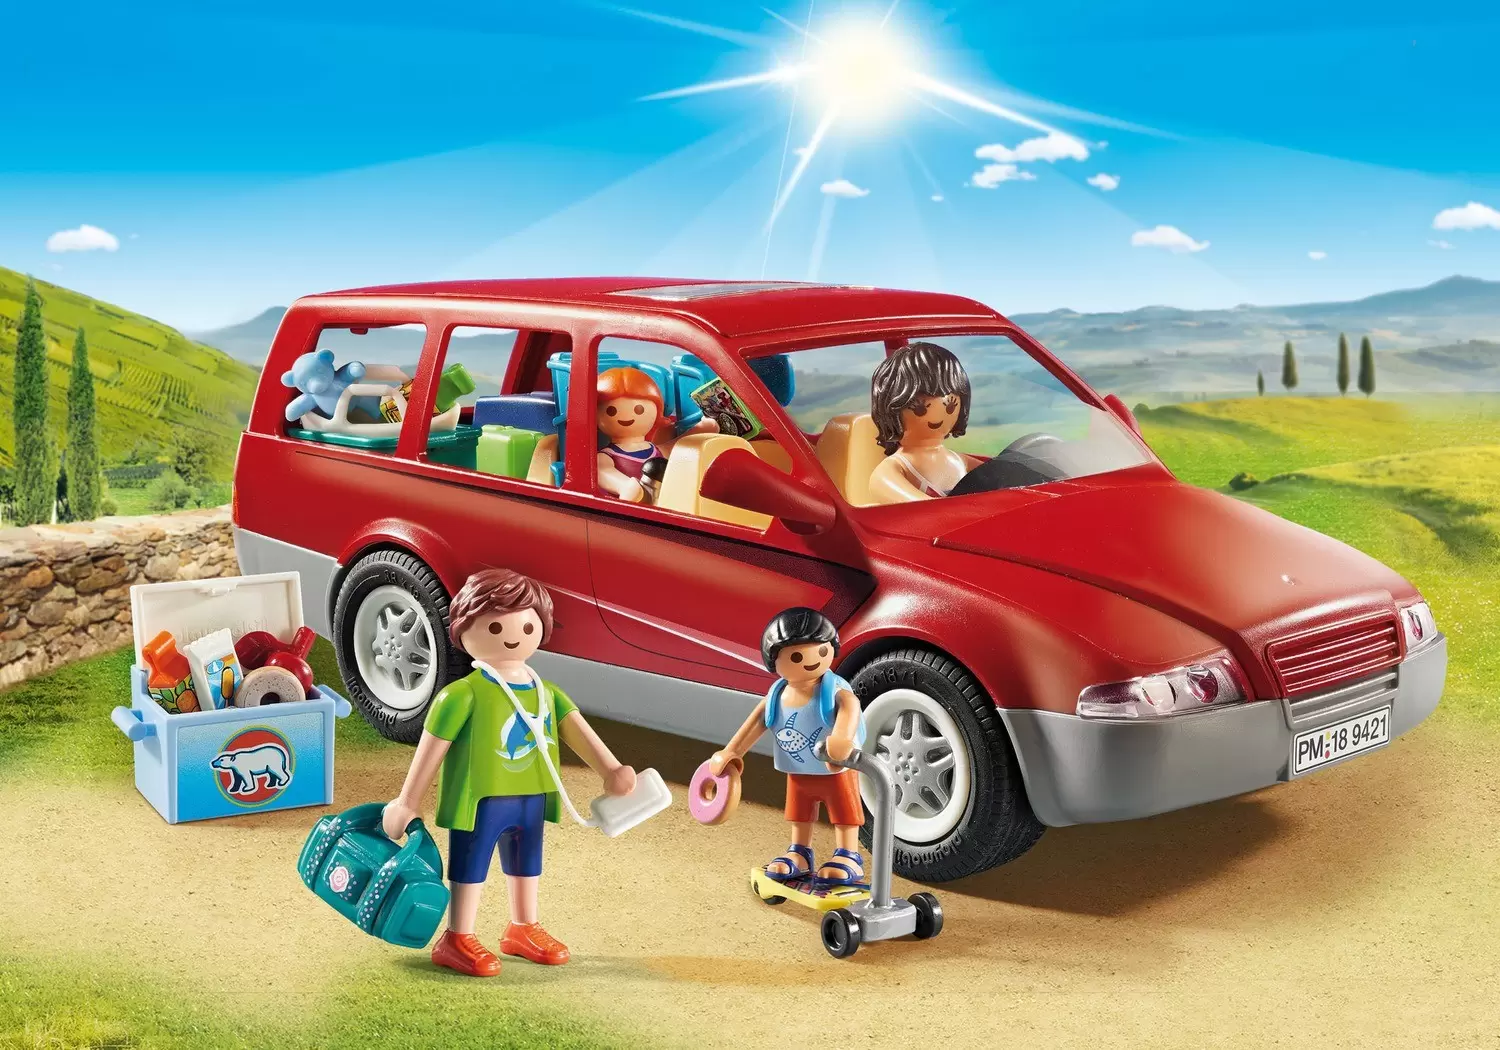 Playmobil :Voiture familiale rouge